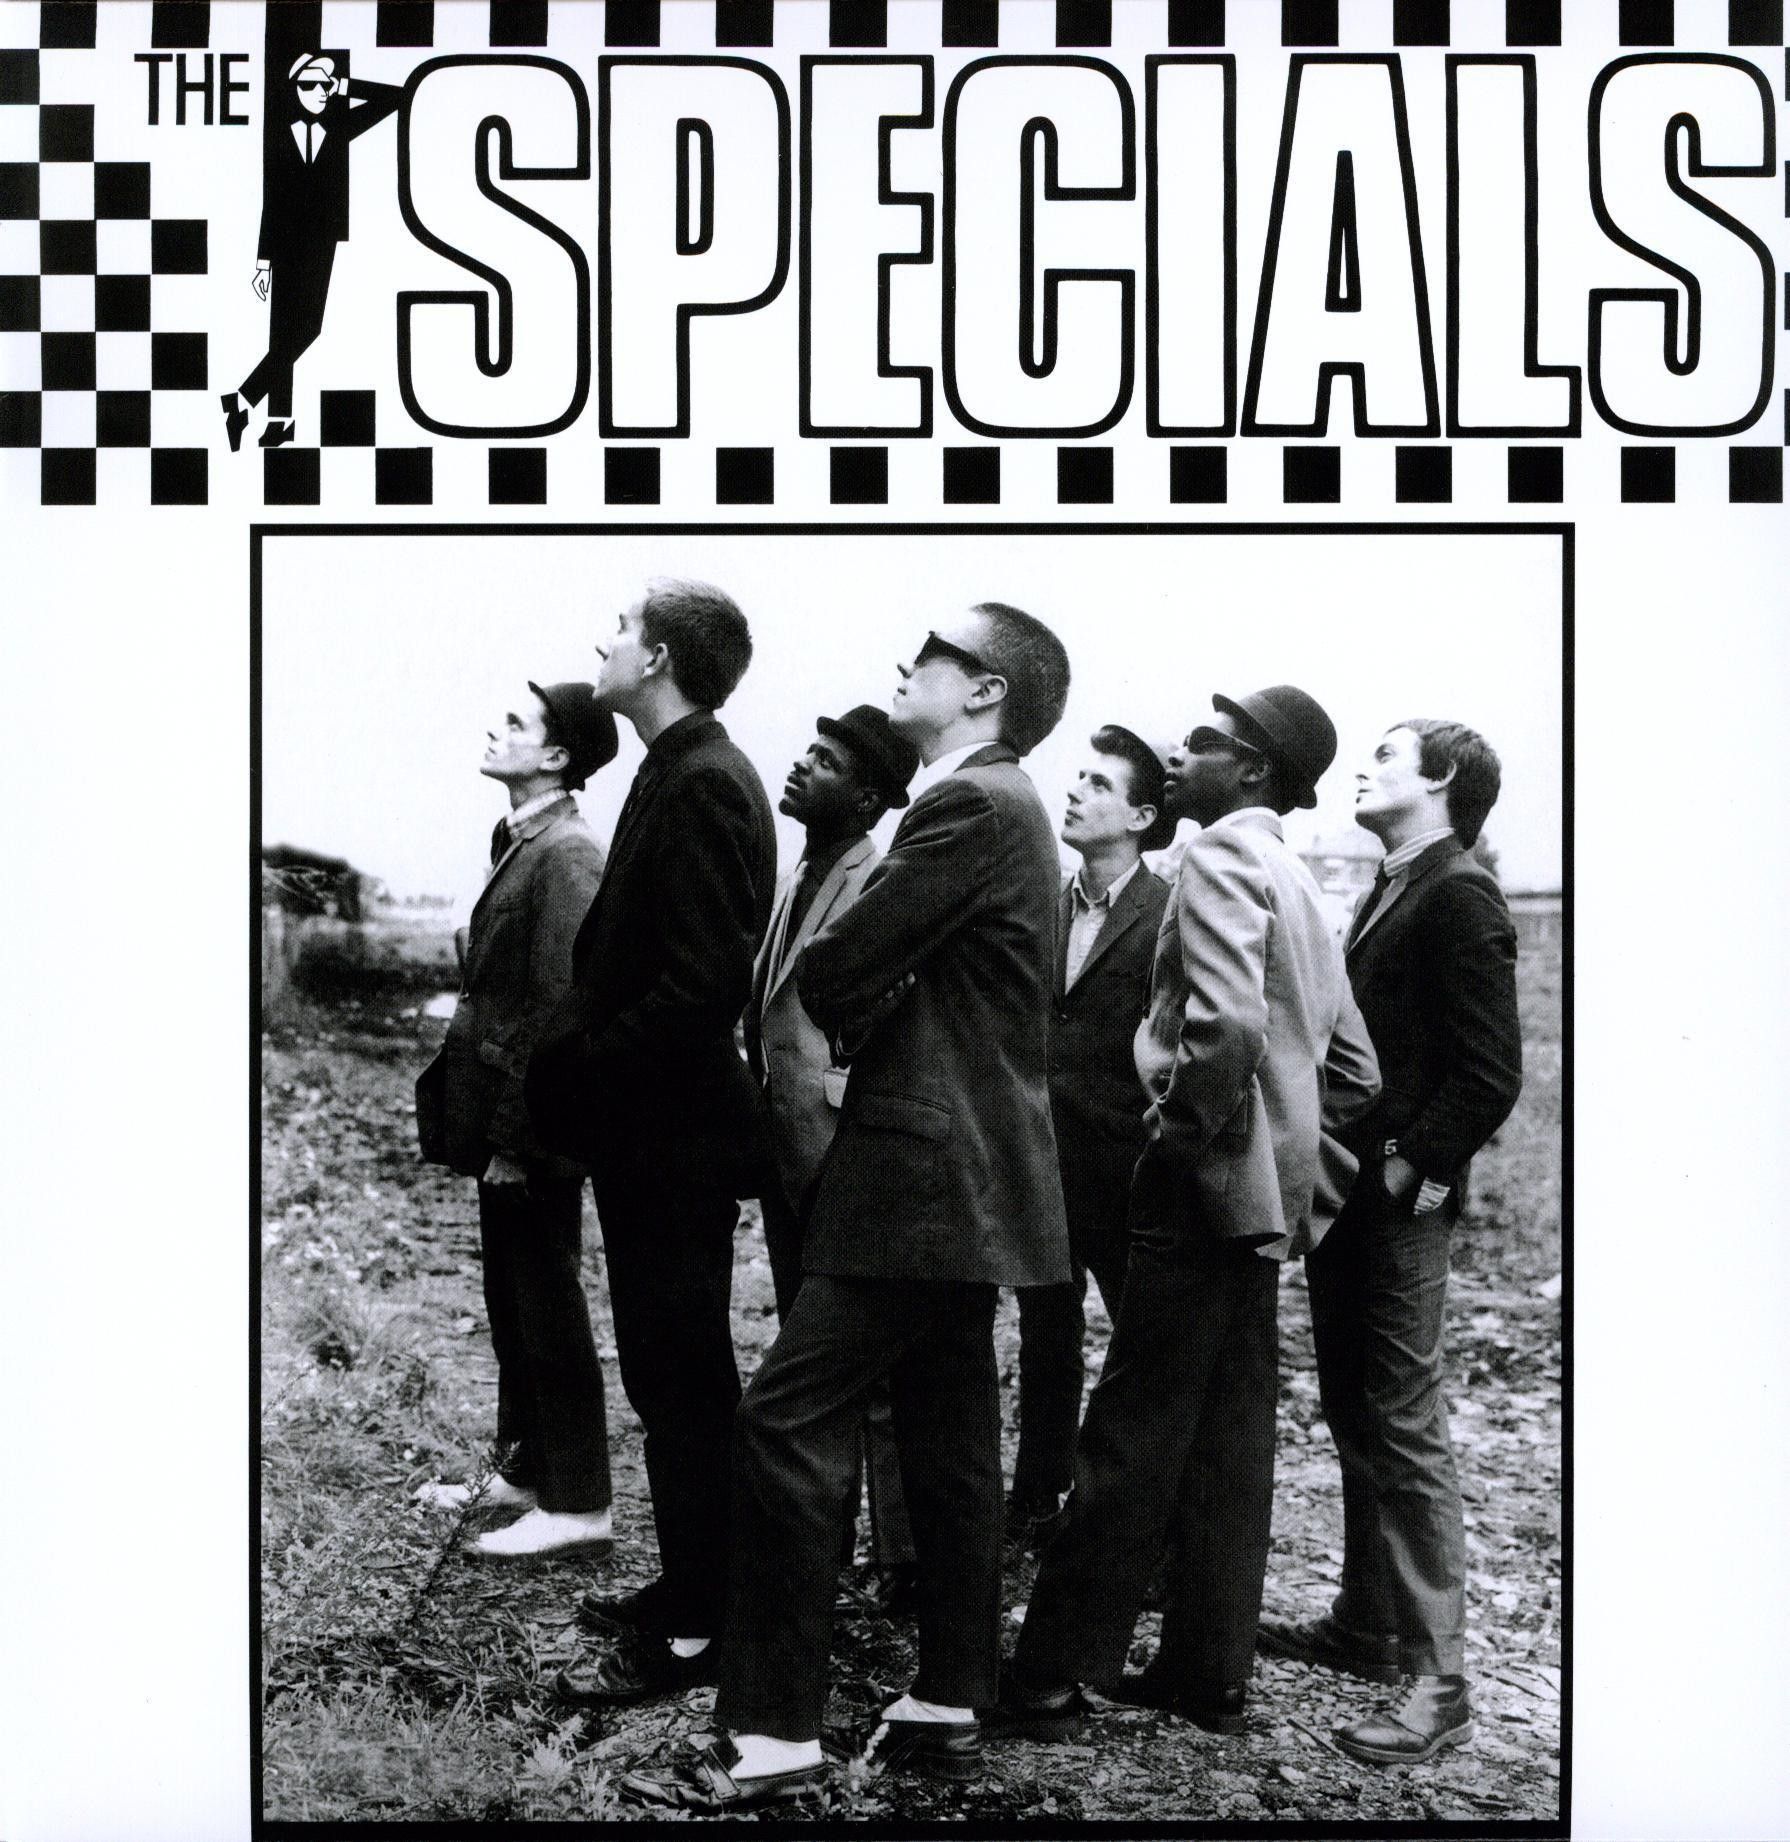 Specials’ Eponymous Debut Album ‘The Specials’ Turns 40 | Anniversary Retrospective